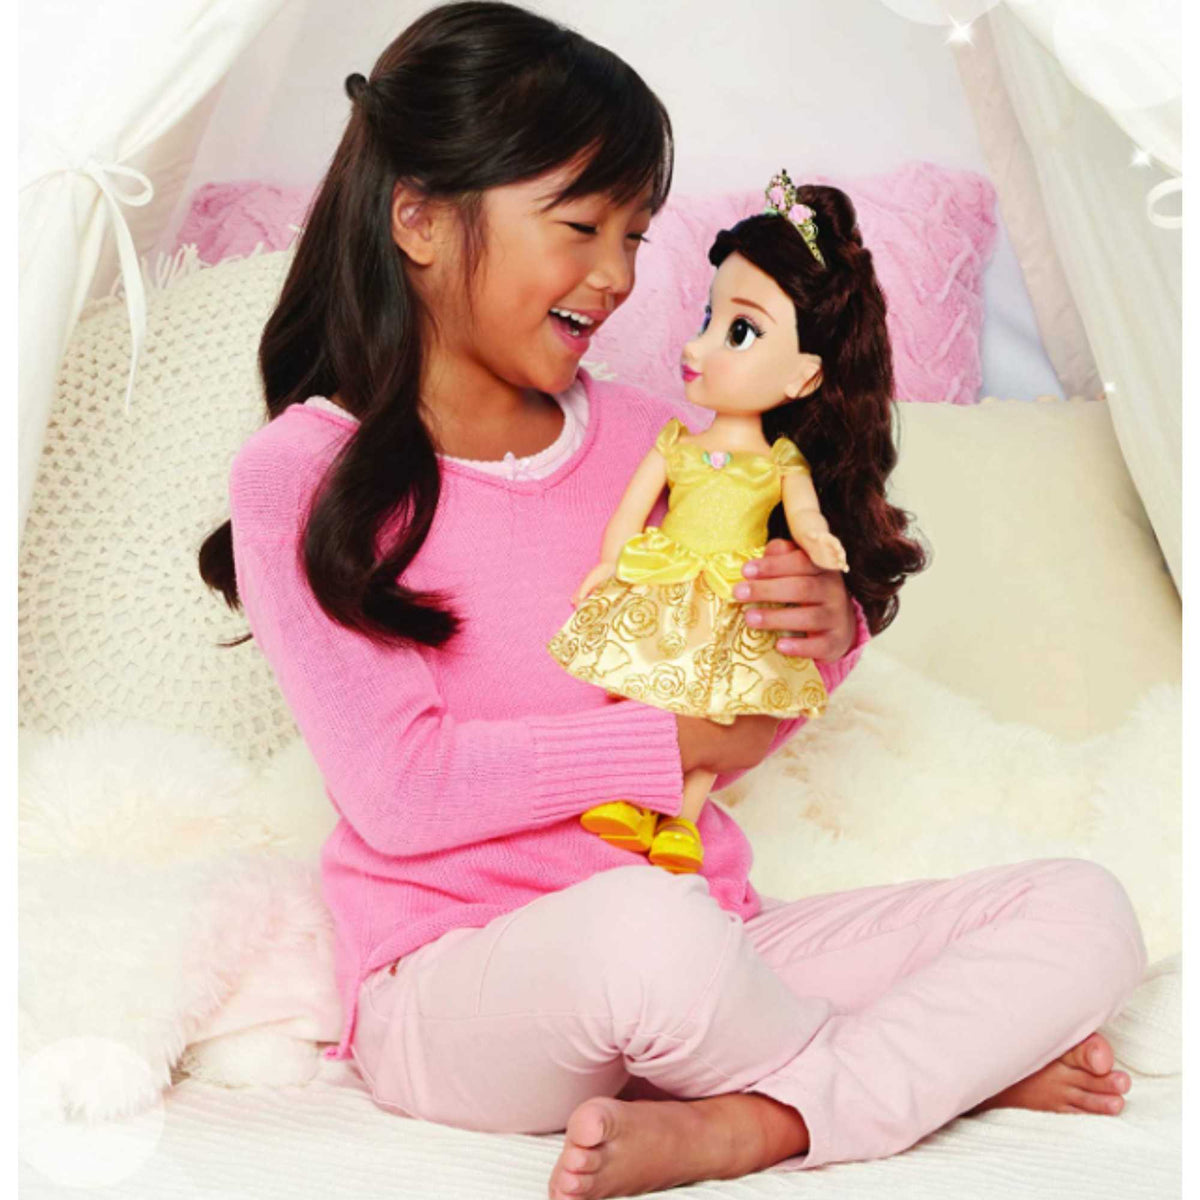 Disney Princess My Friend Belle Doll